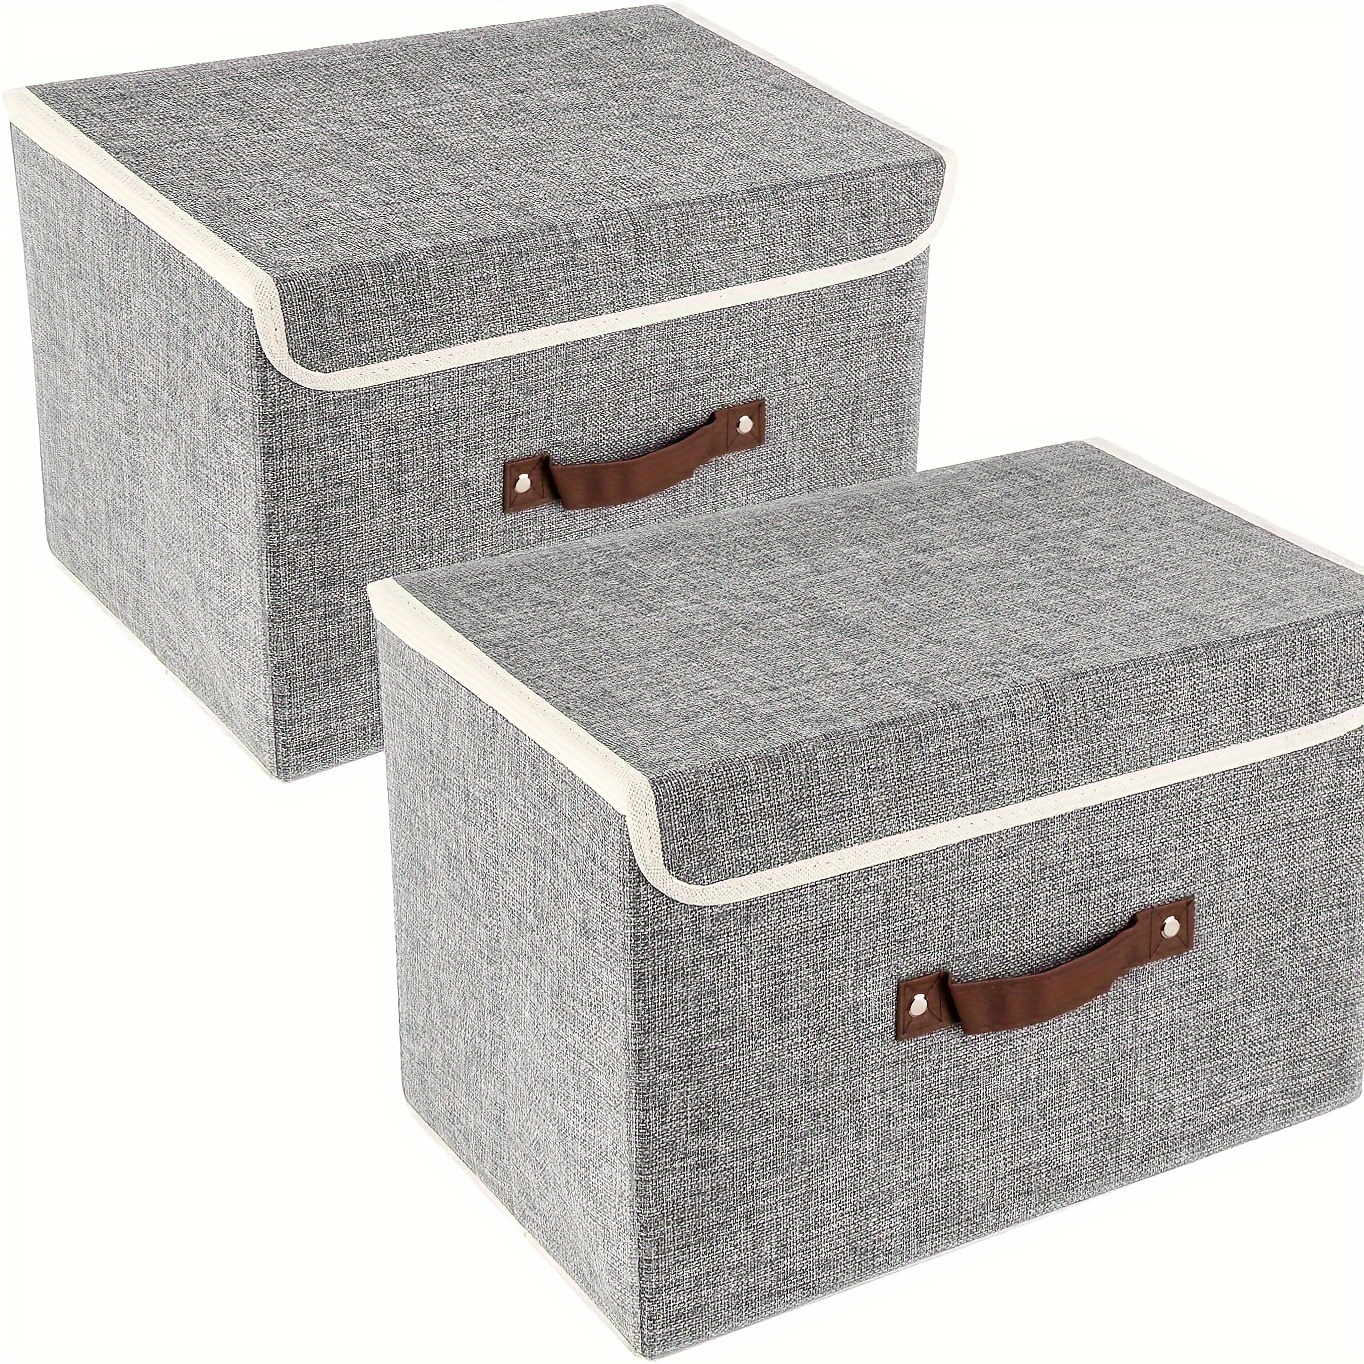  Grey - Lidded Home Storage Bins / Storage Baskets, Bins &  Containers: Home & Kitchen